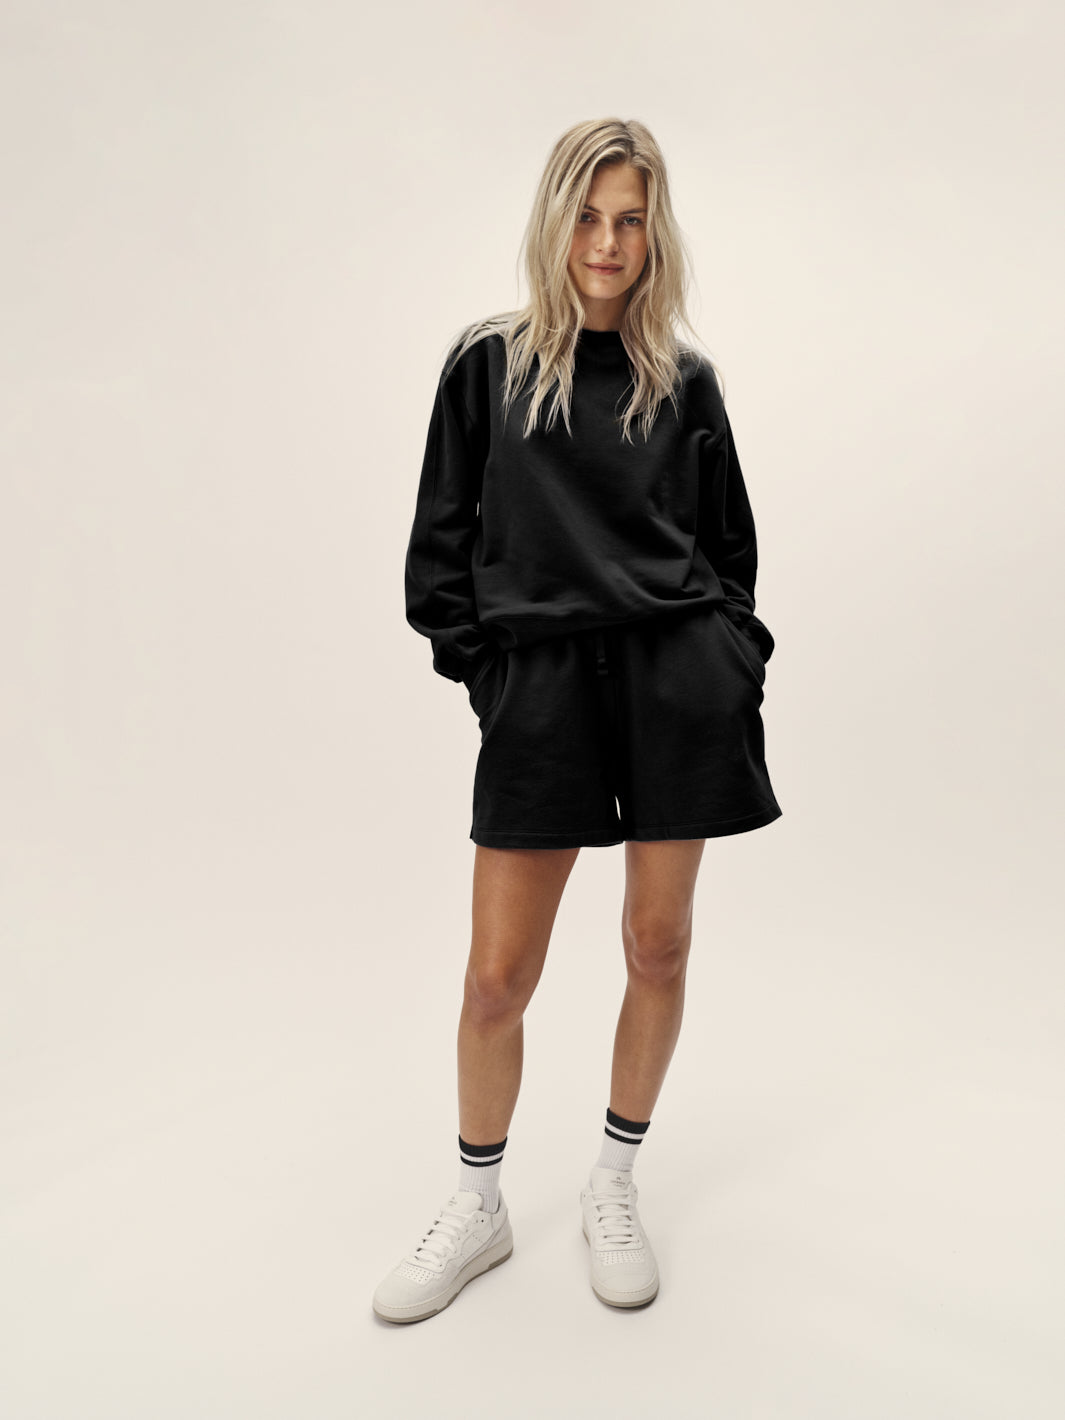 Damen Sweatshort in Farbe schwarz, 100% organic Cotton, made in Portugal